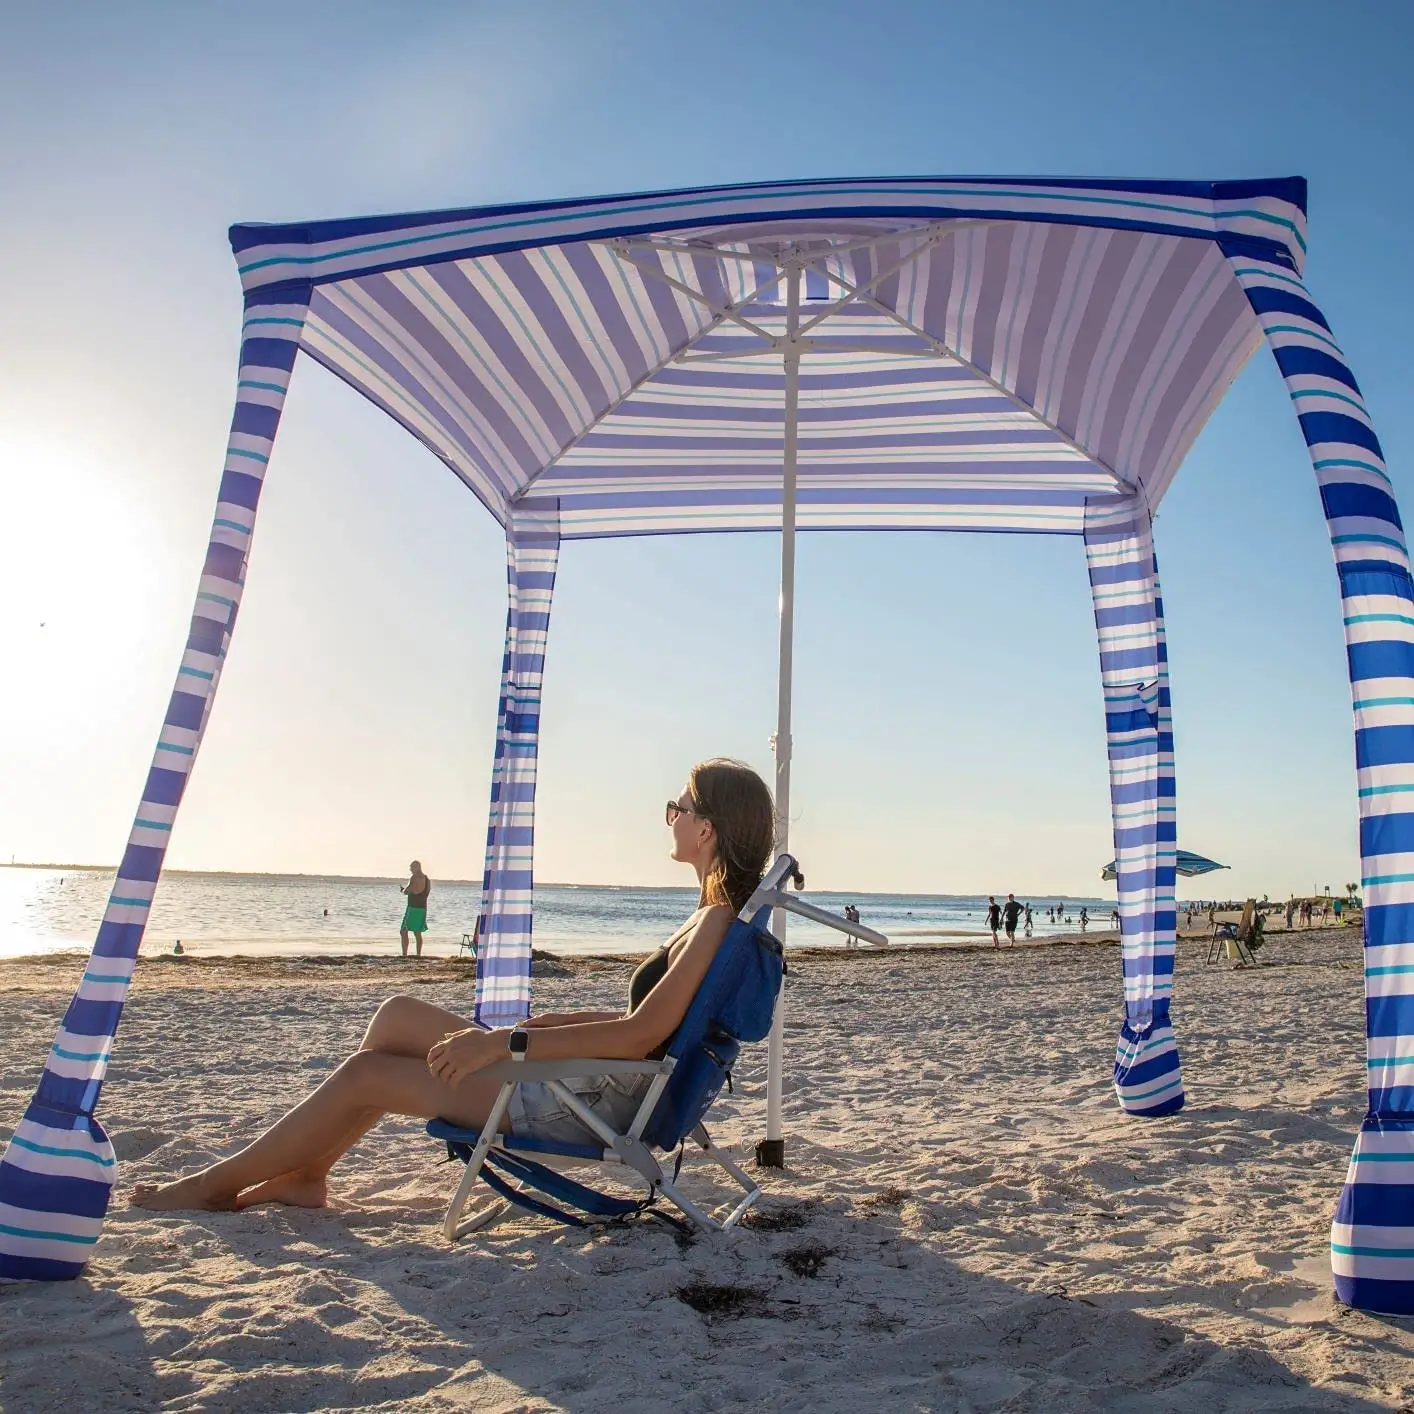 Custom Printing 4 Legs 6ft Outdoor Portable Beach Cabana Tents Windproof Square Sun Shelter Cabana Beach Umbrella